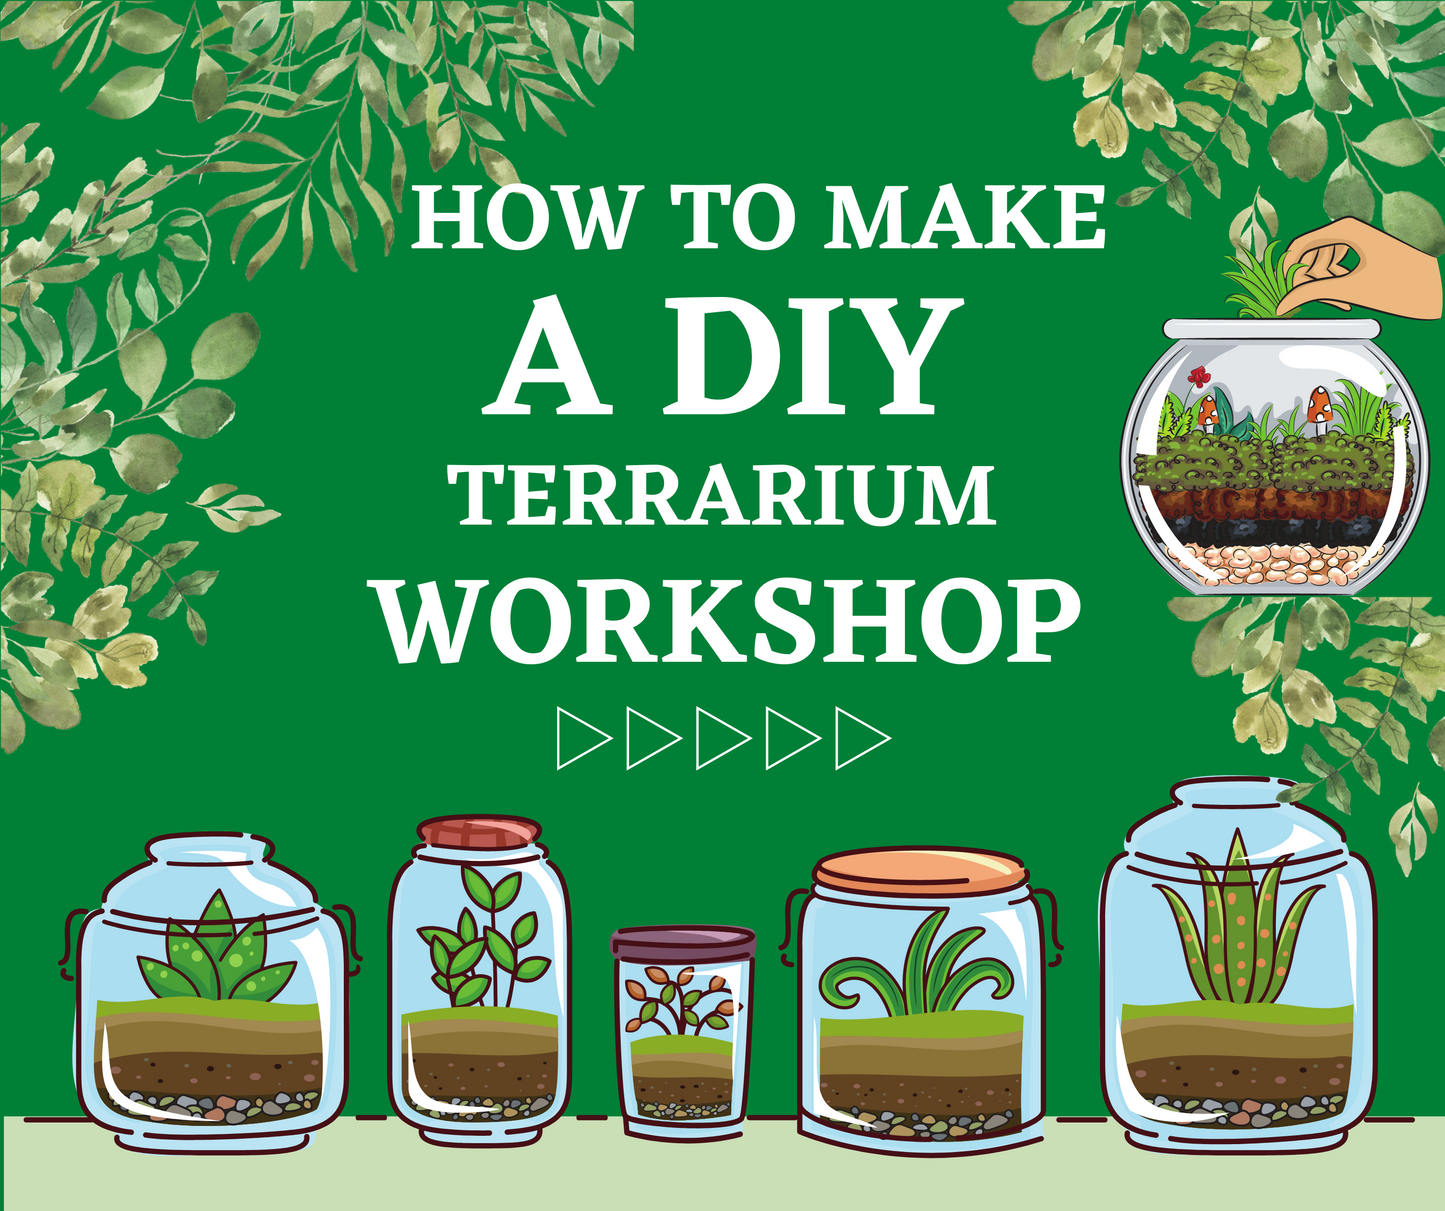 Nancy's Terrarium Workshop • February 28, Wednesday • 6pm-8pm